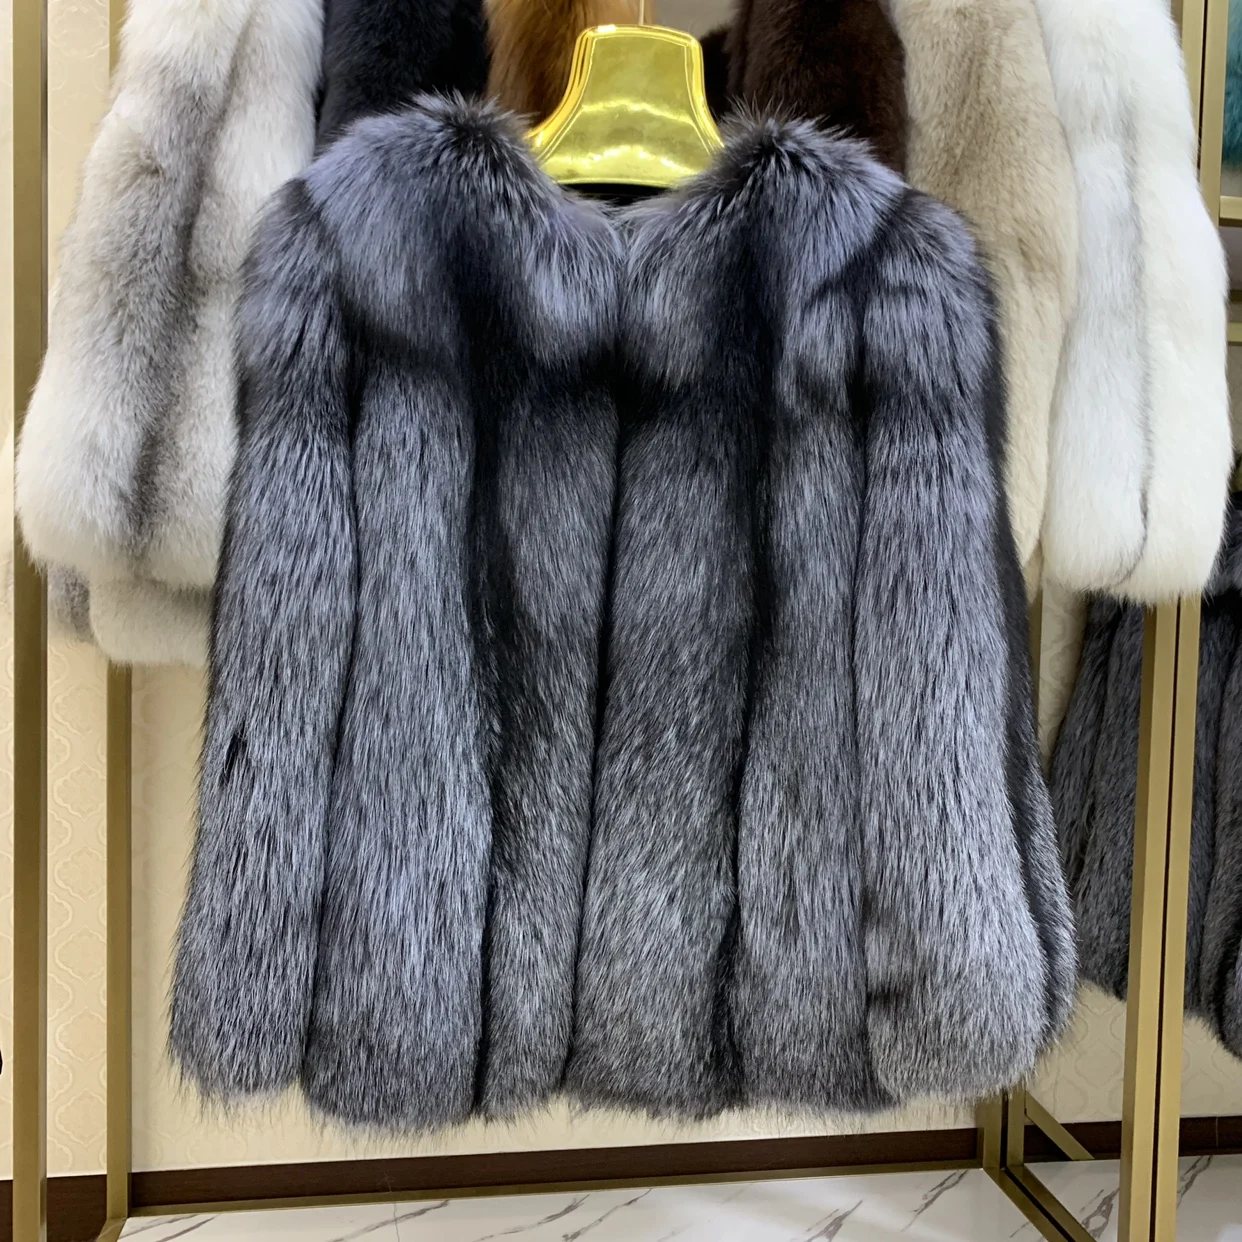 2022 New Real Fur Coat Full Pelt 100% Natural Fox Fur Jacket Female Winter Thick Warm Silver Fox Fur Overcoat Free Shipping enlarge